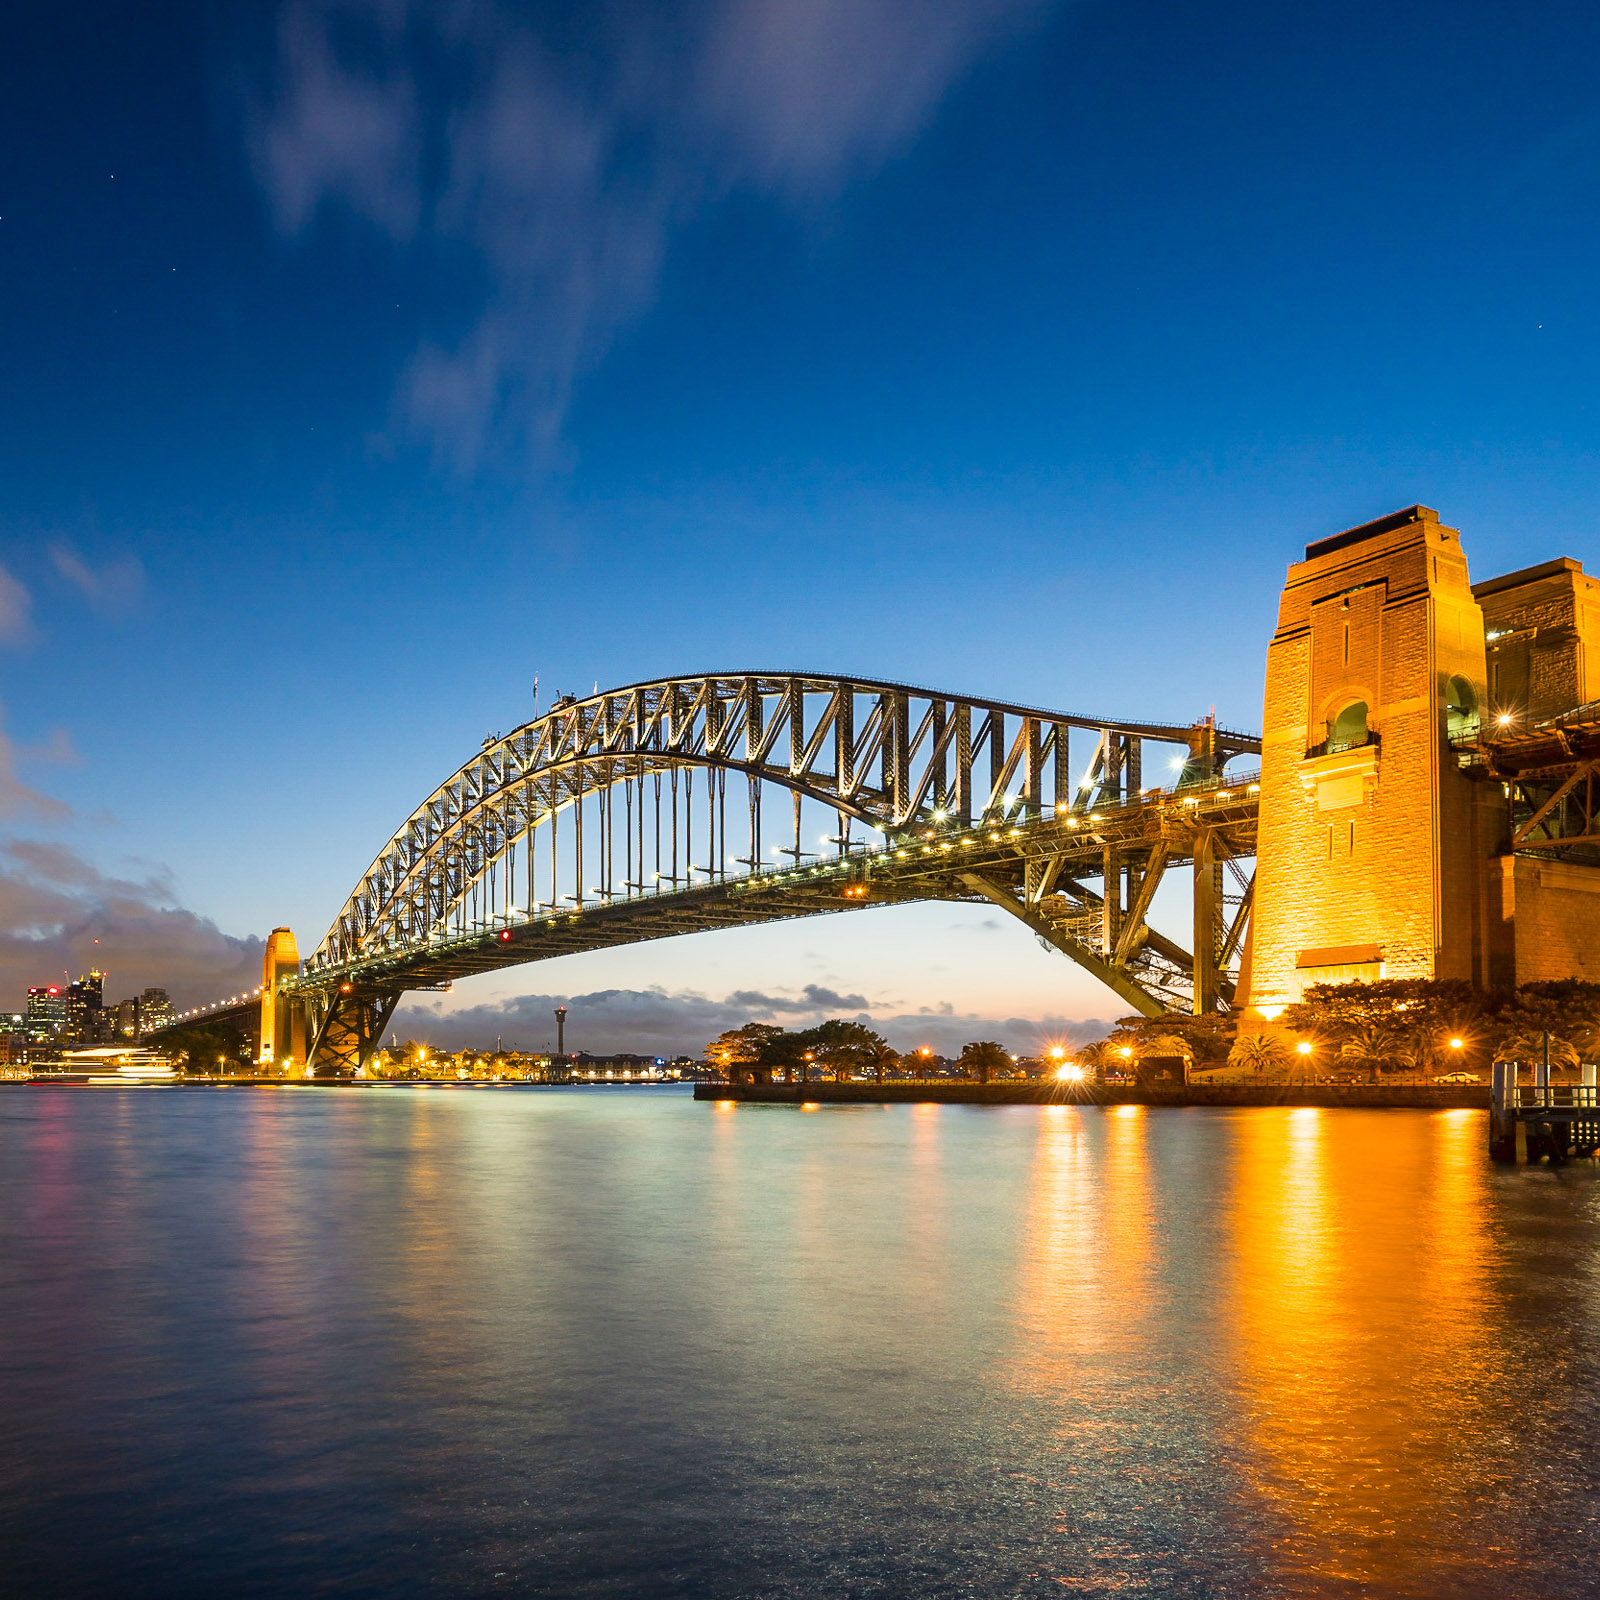 Сидней саммерс. Мост Харбор бридж. Харбор-бридж. Оперный театр в Сиднее. Мост в Австралии.